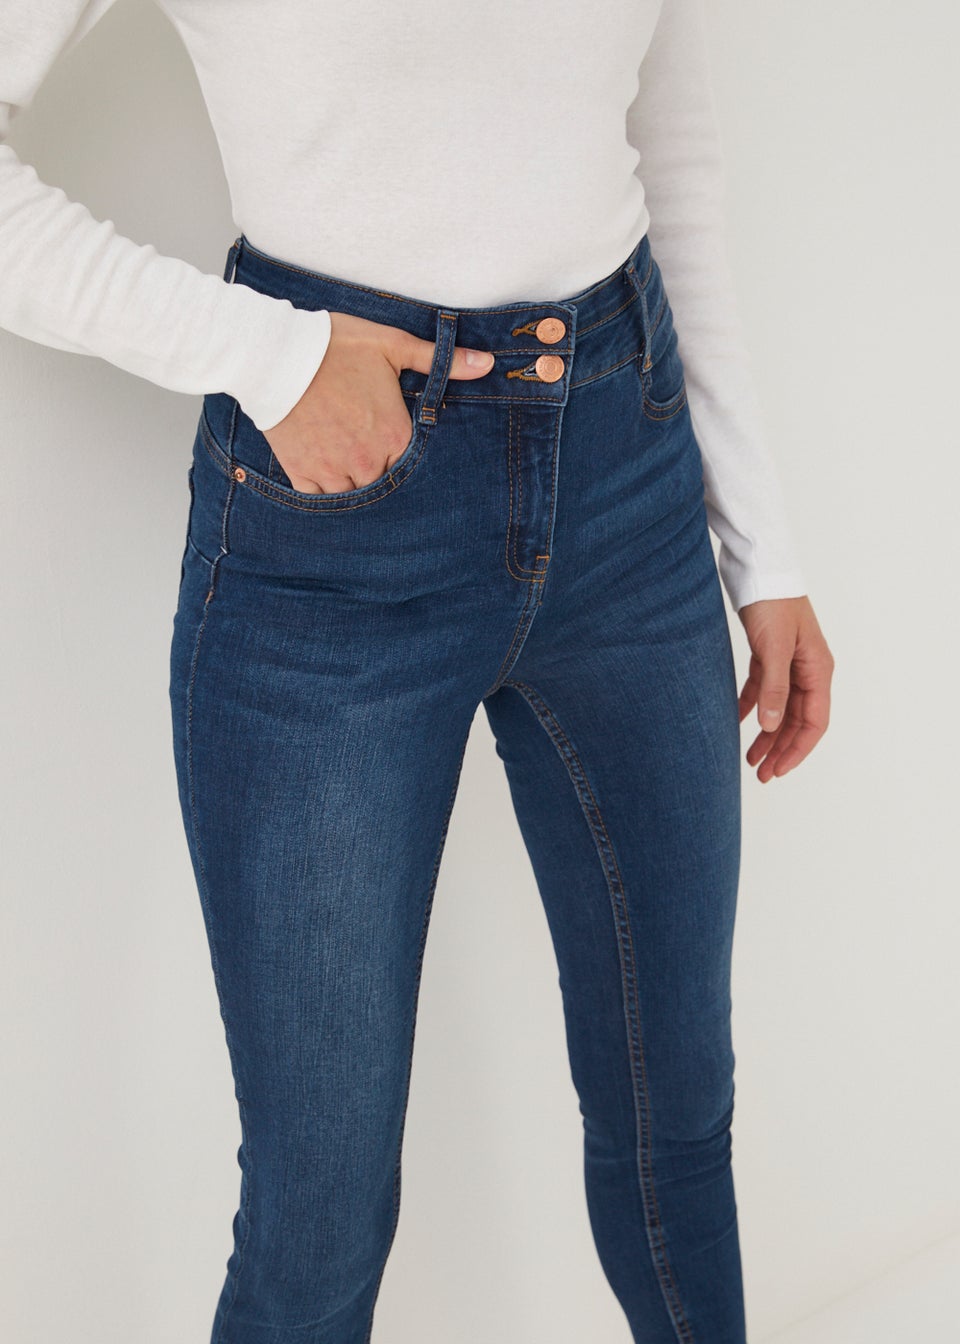 April Dark Wash Push Up Super Skinny Jeans (Long Length) - Matalan